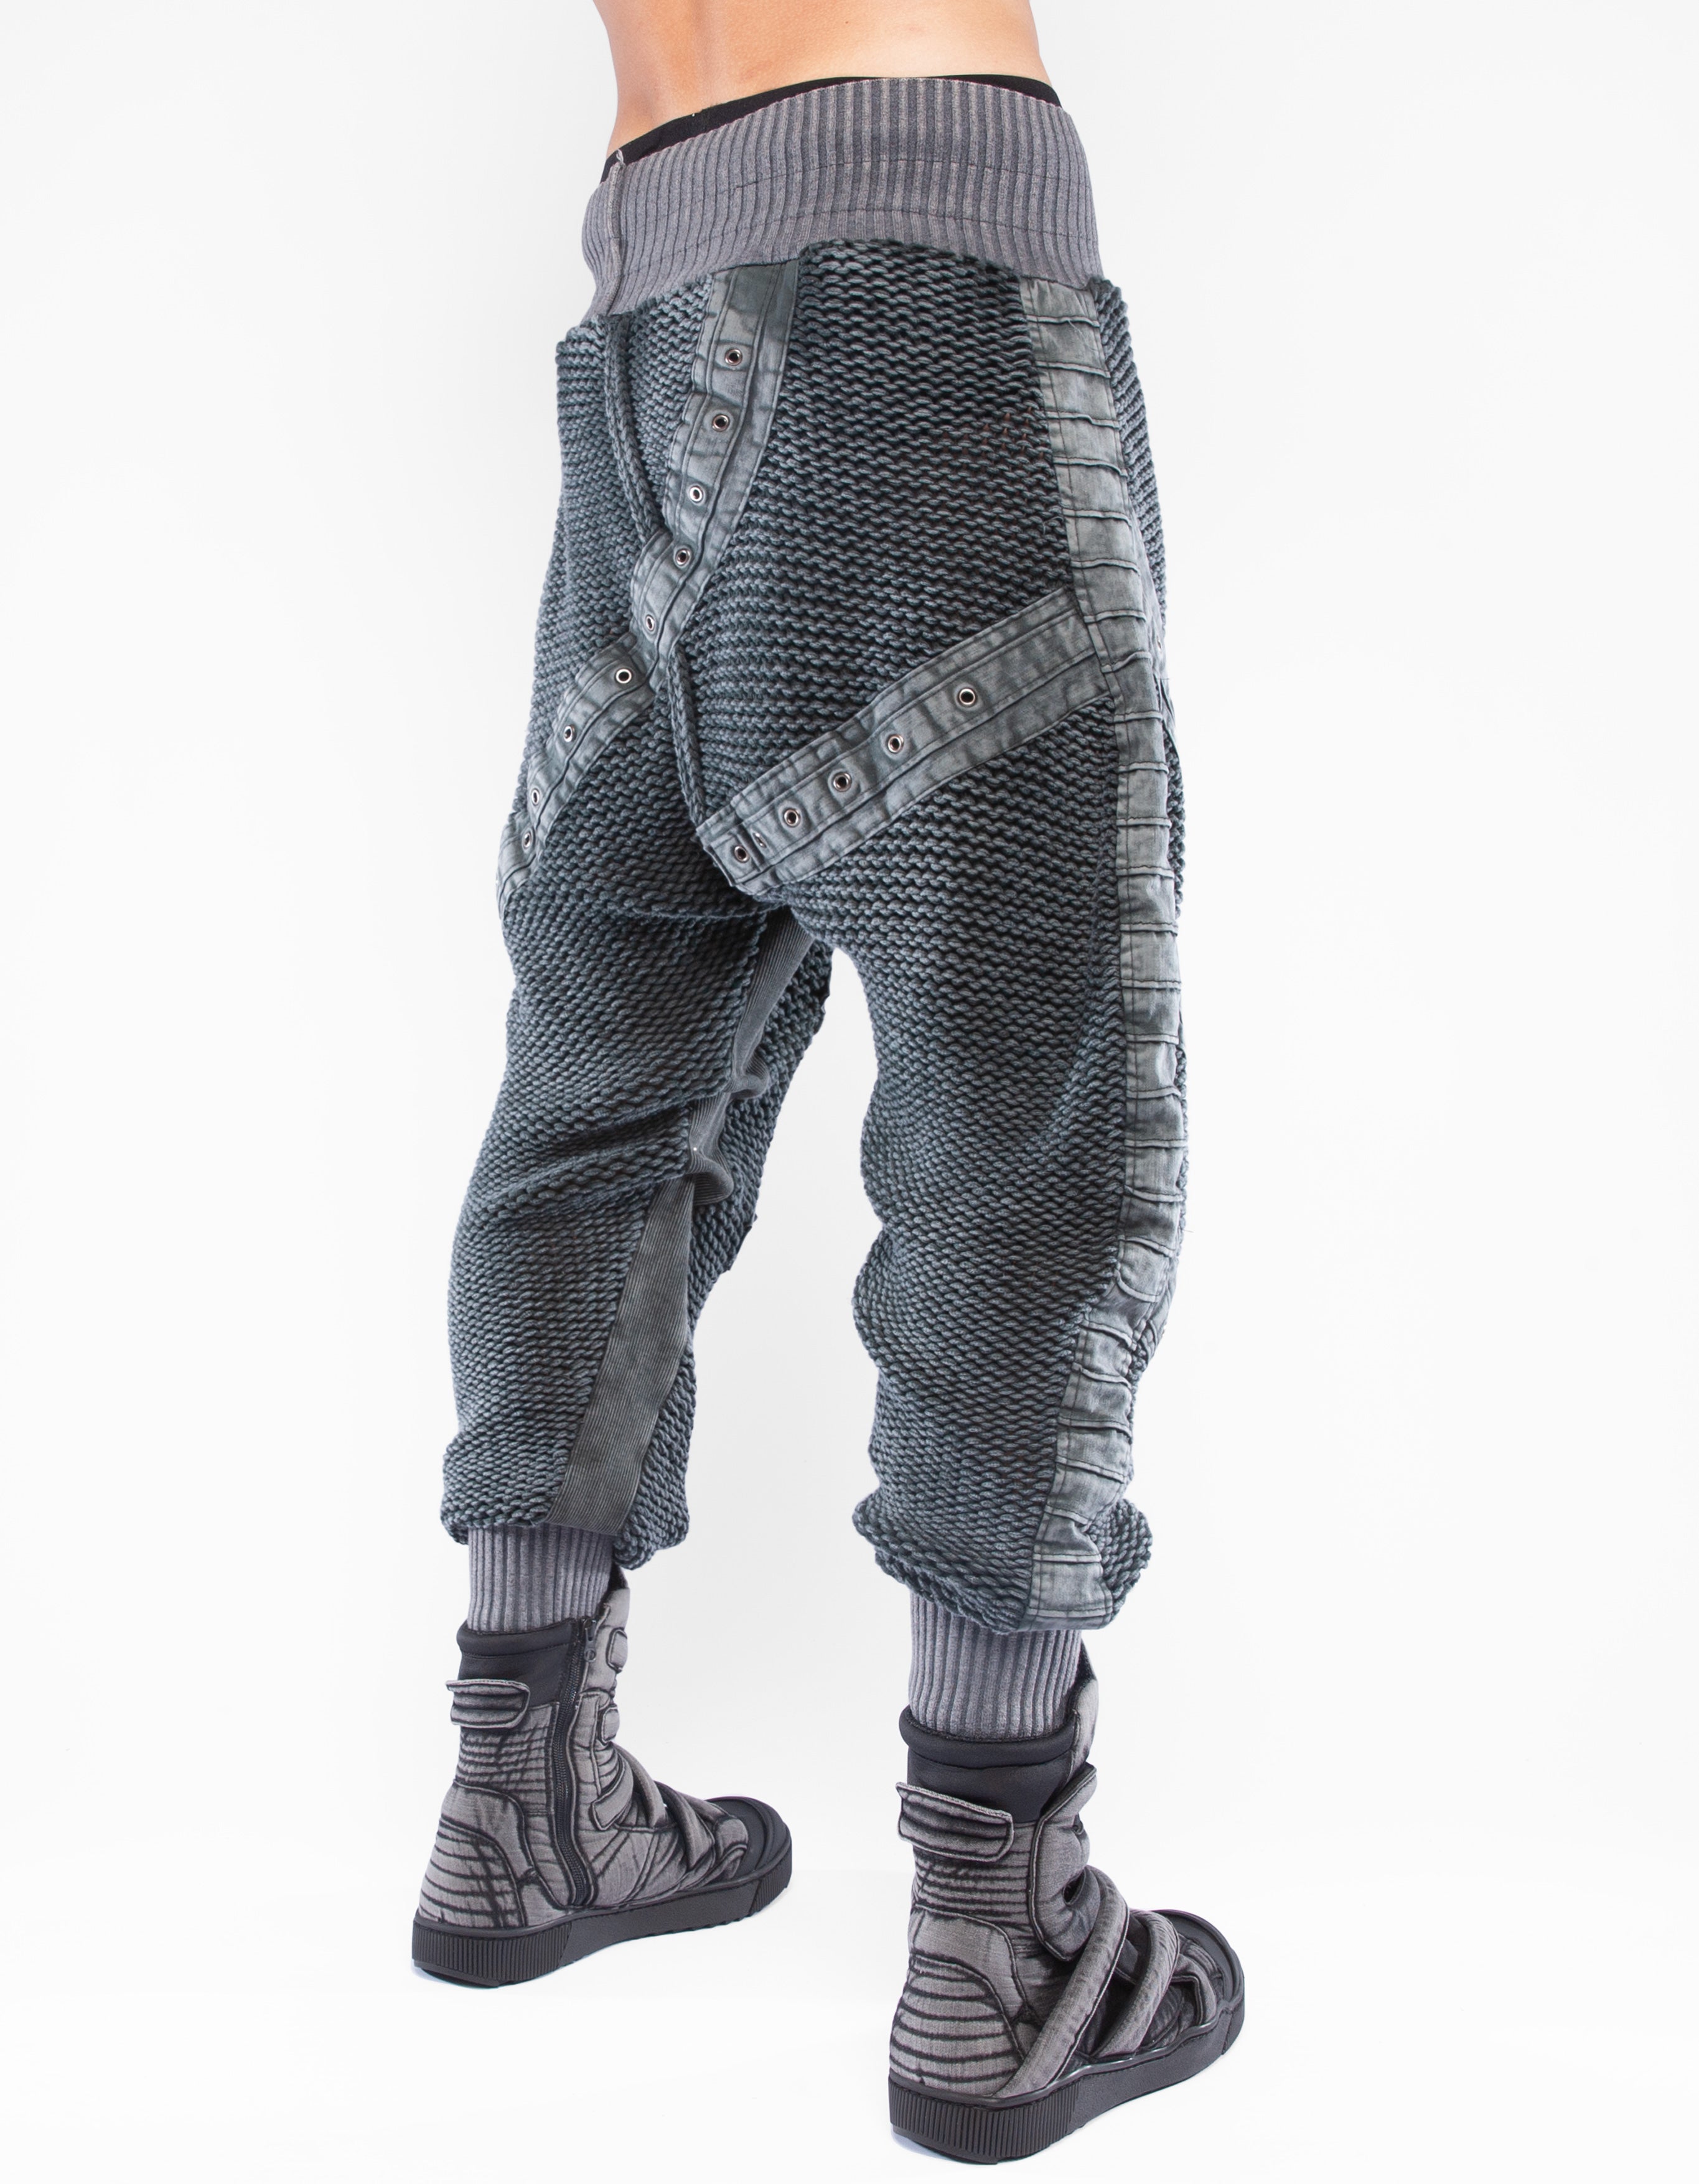 ellazhu Men's Harem Pants Elastic Waist Black Sweaterpants for Men Yoga  David Rose Costume Baggy Joggers GYM22 A, Black, Small-Medium : Amazon.in:  Clothing & Accessories